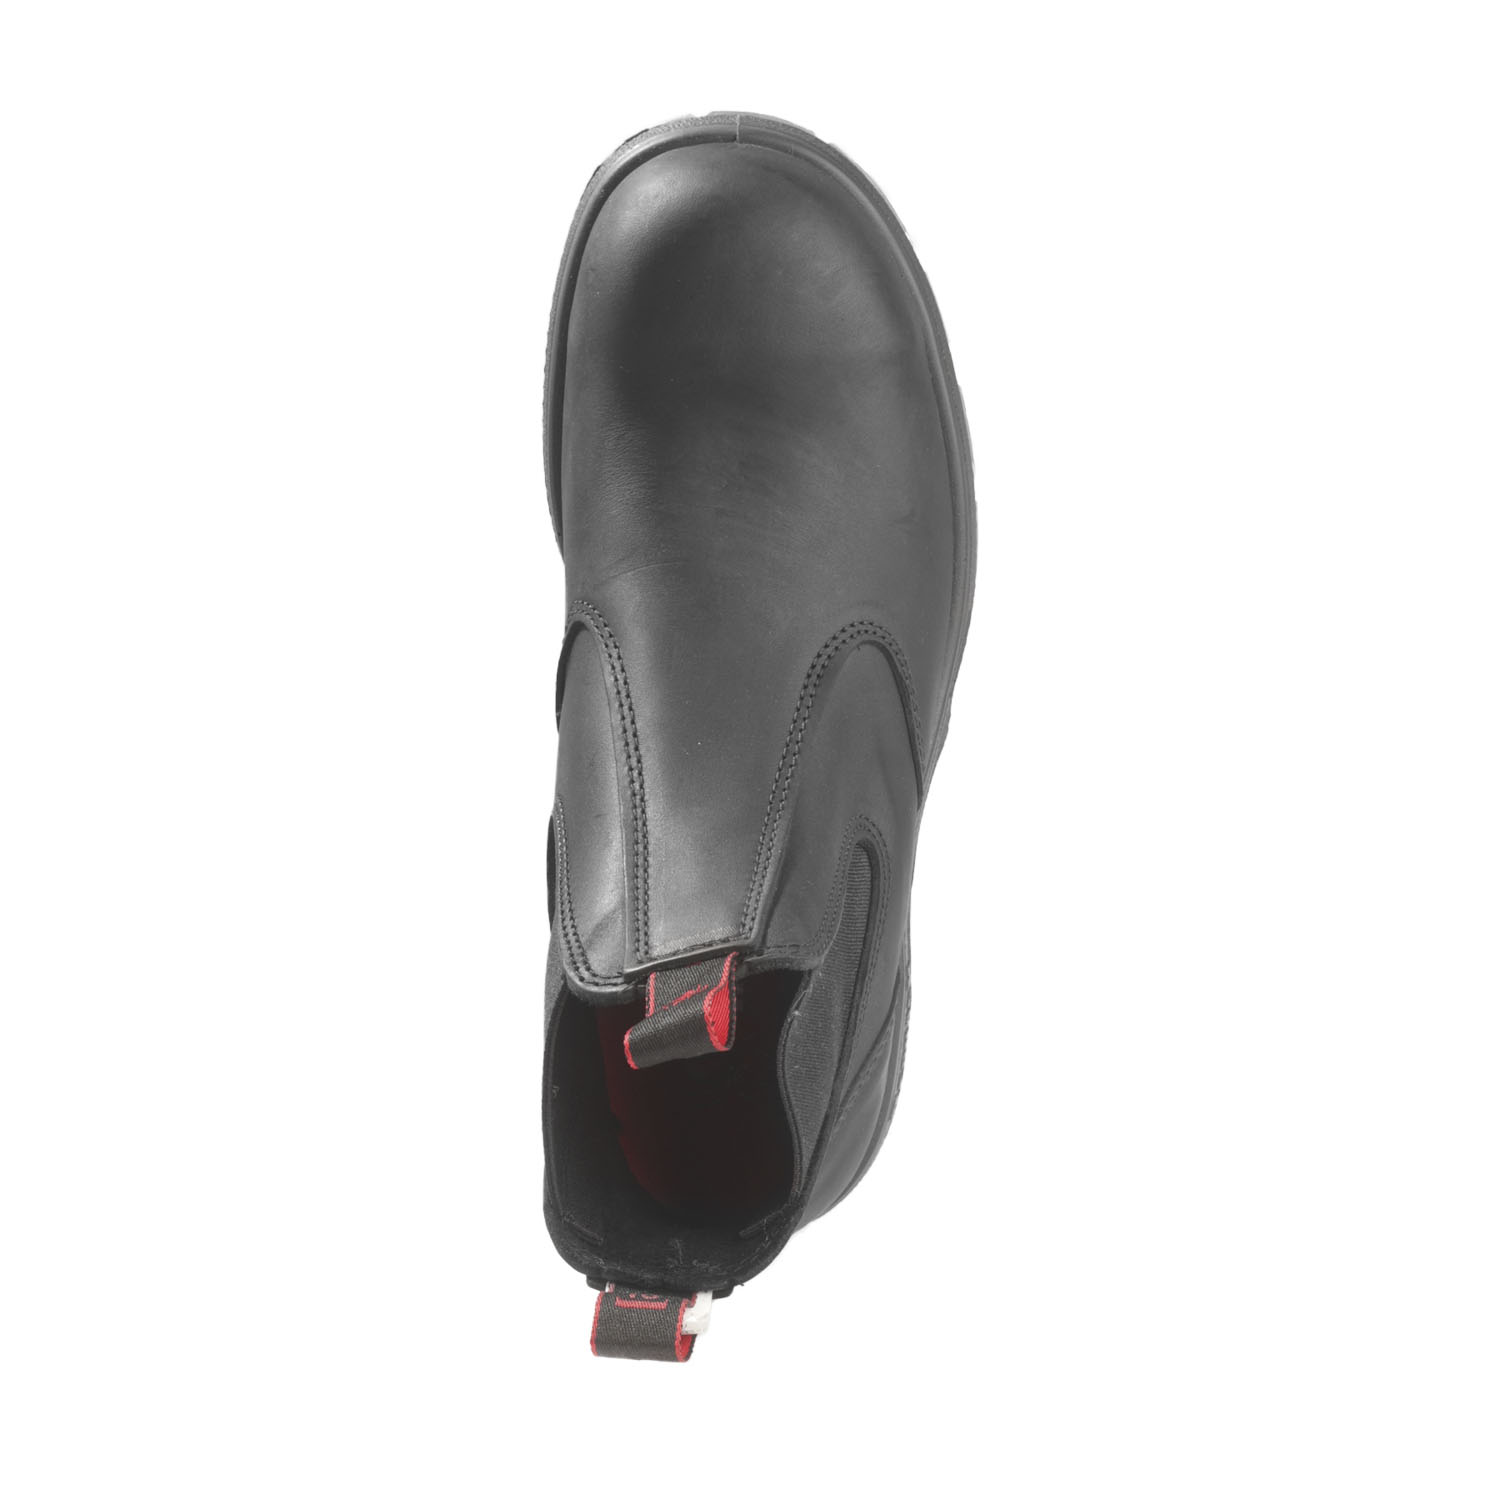 Redback USBBK Slip On Steel Toe Boot